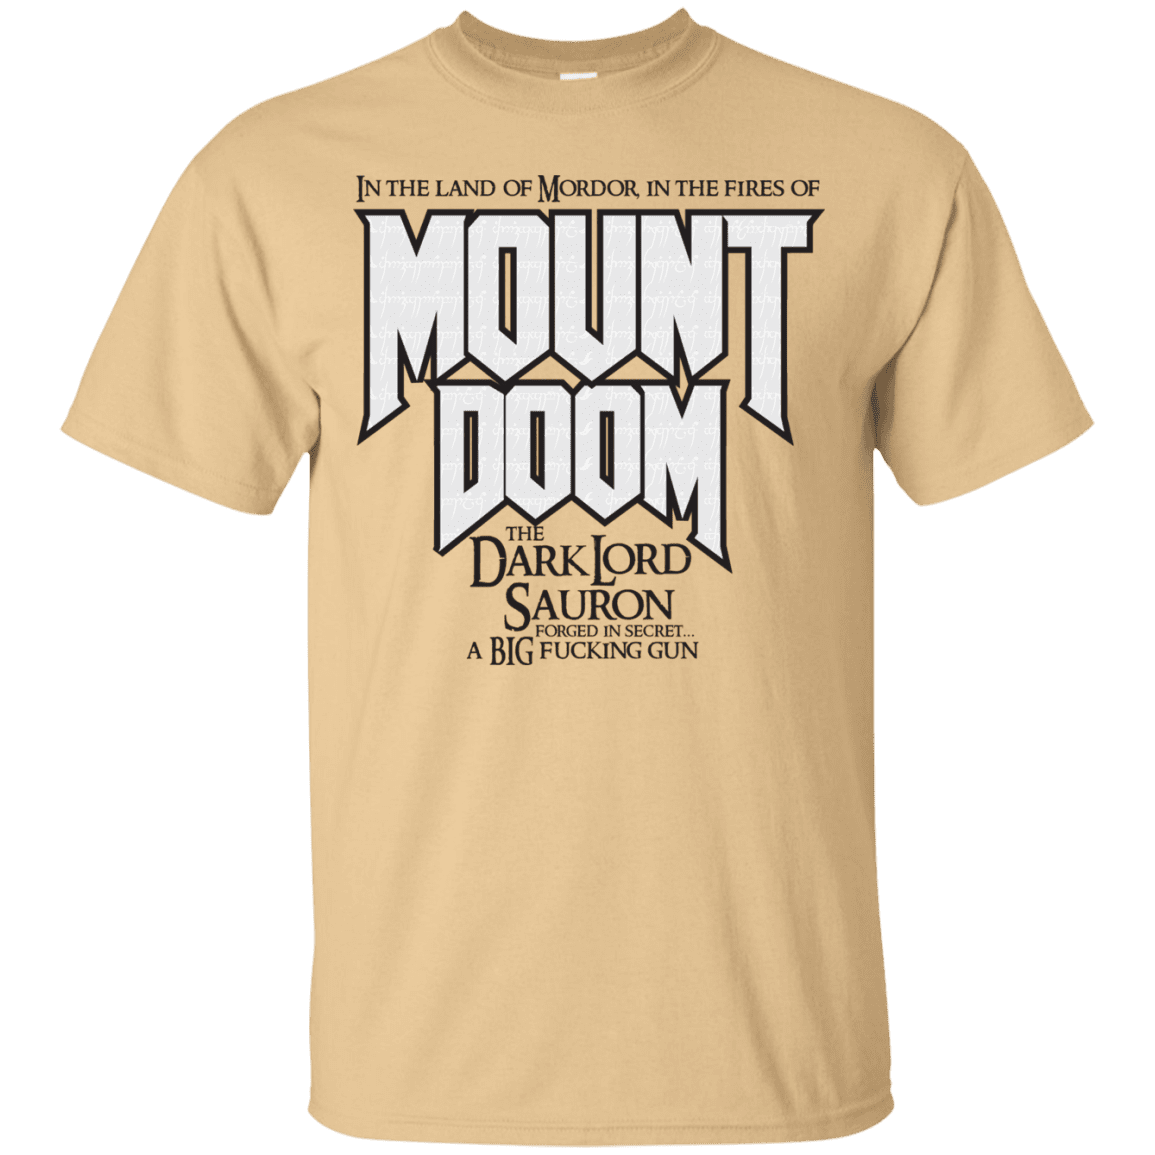 T-Shirts Vegas Gold / S Mount DOOM T-Shirt